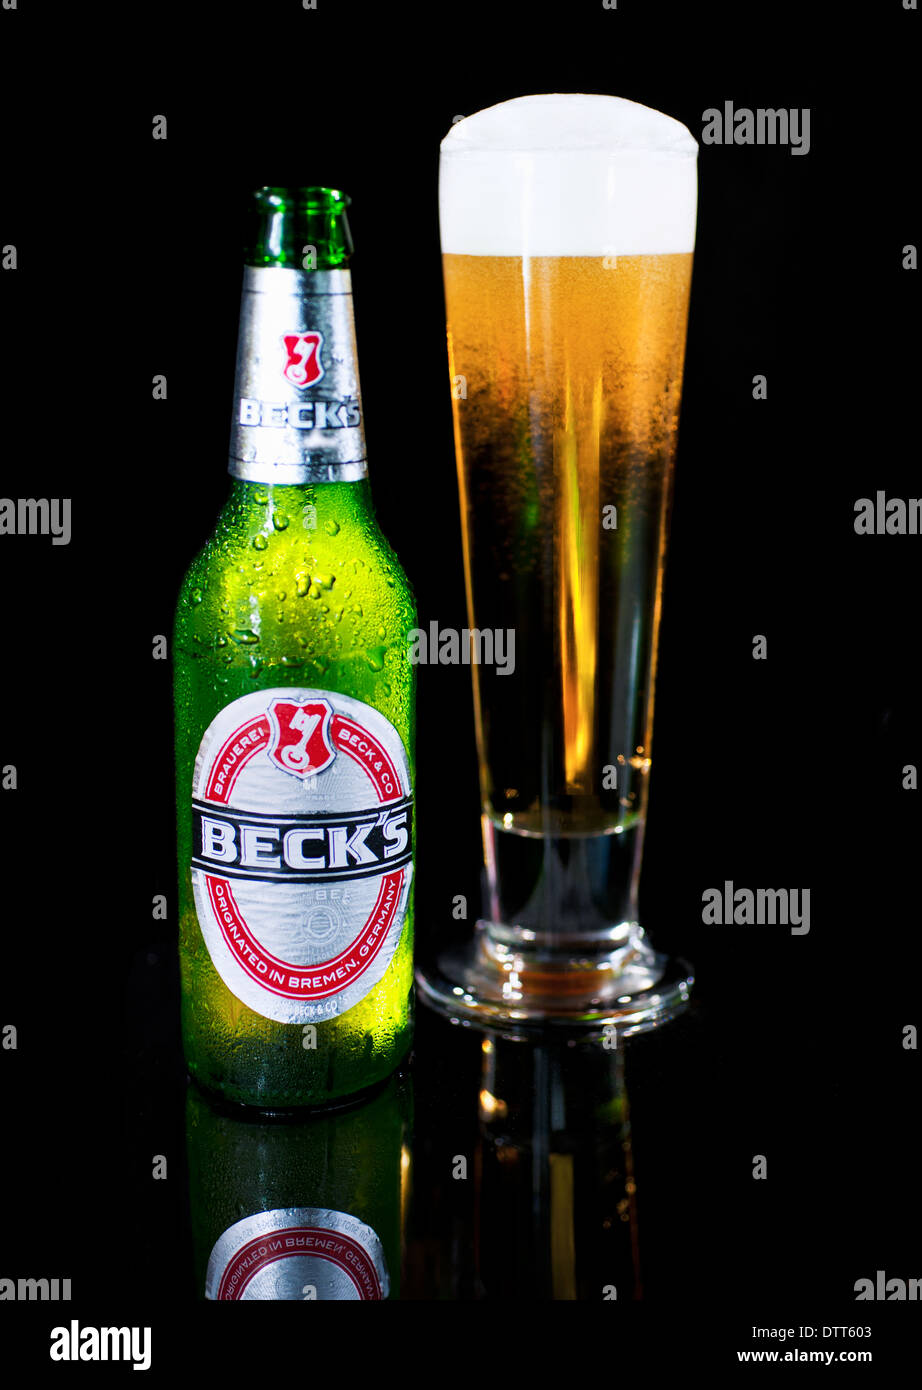 Becks birra ancora la vita Foto stock - Alamy